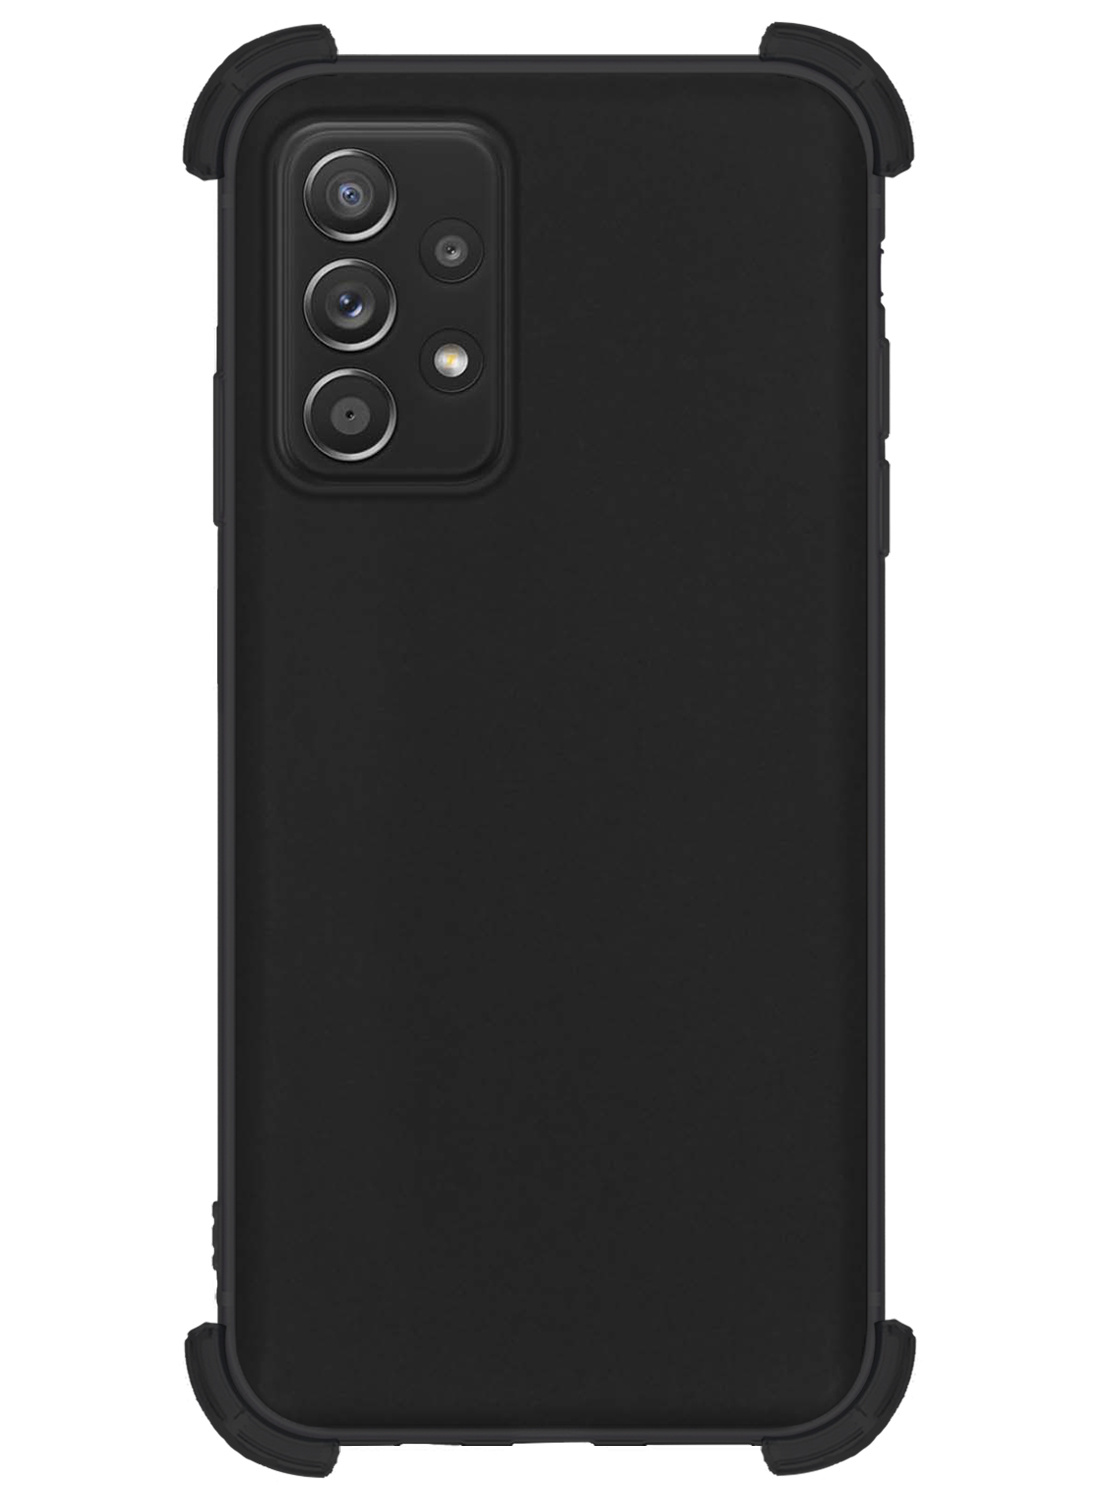 Samsung Galaxy A52 Hoesje Zwart Cover Shock Proof Case Hoes - 2x